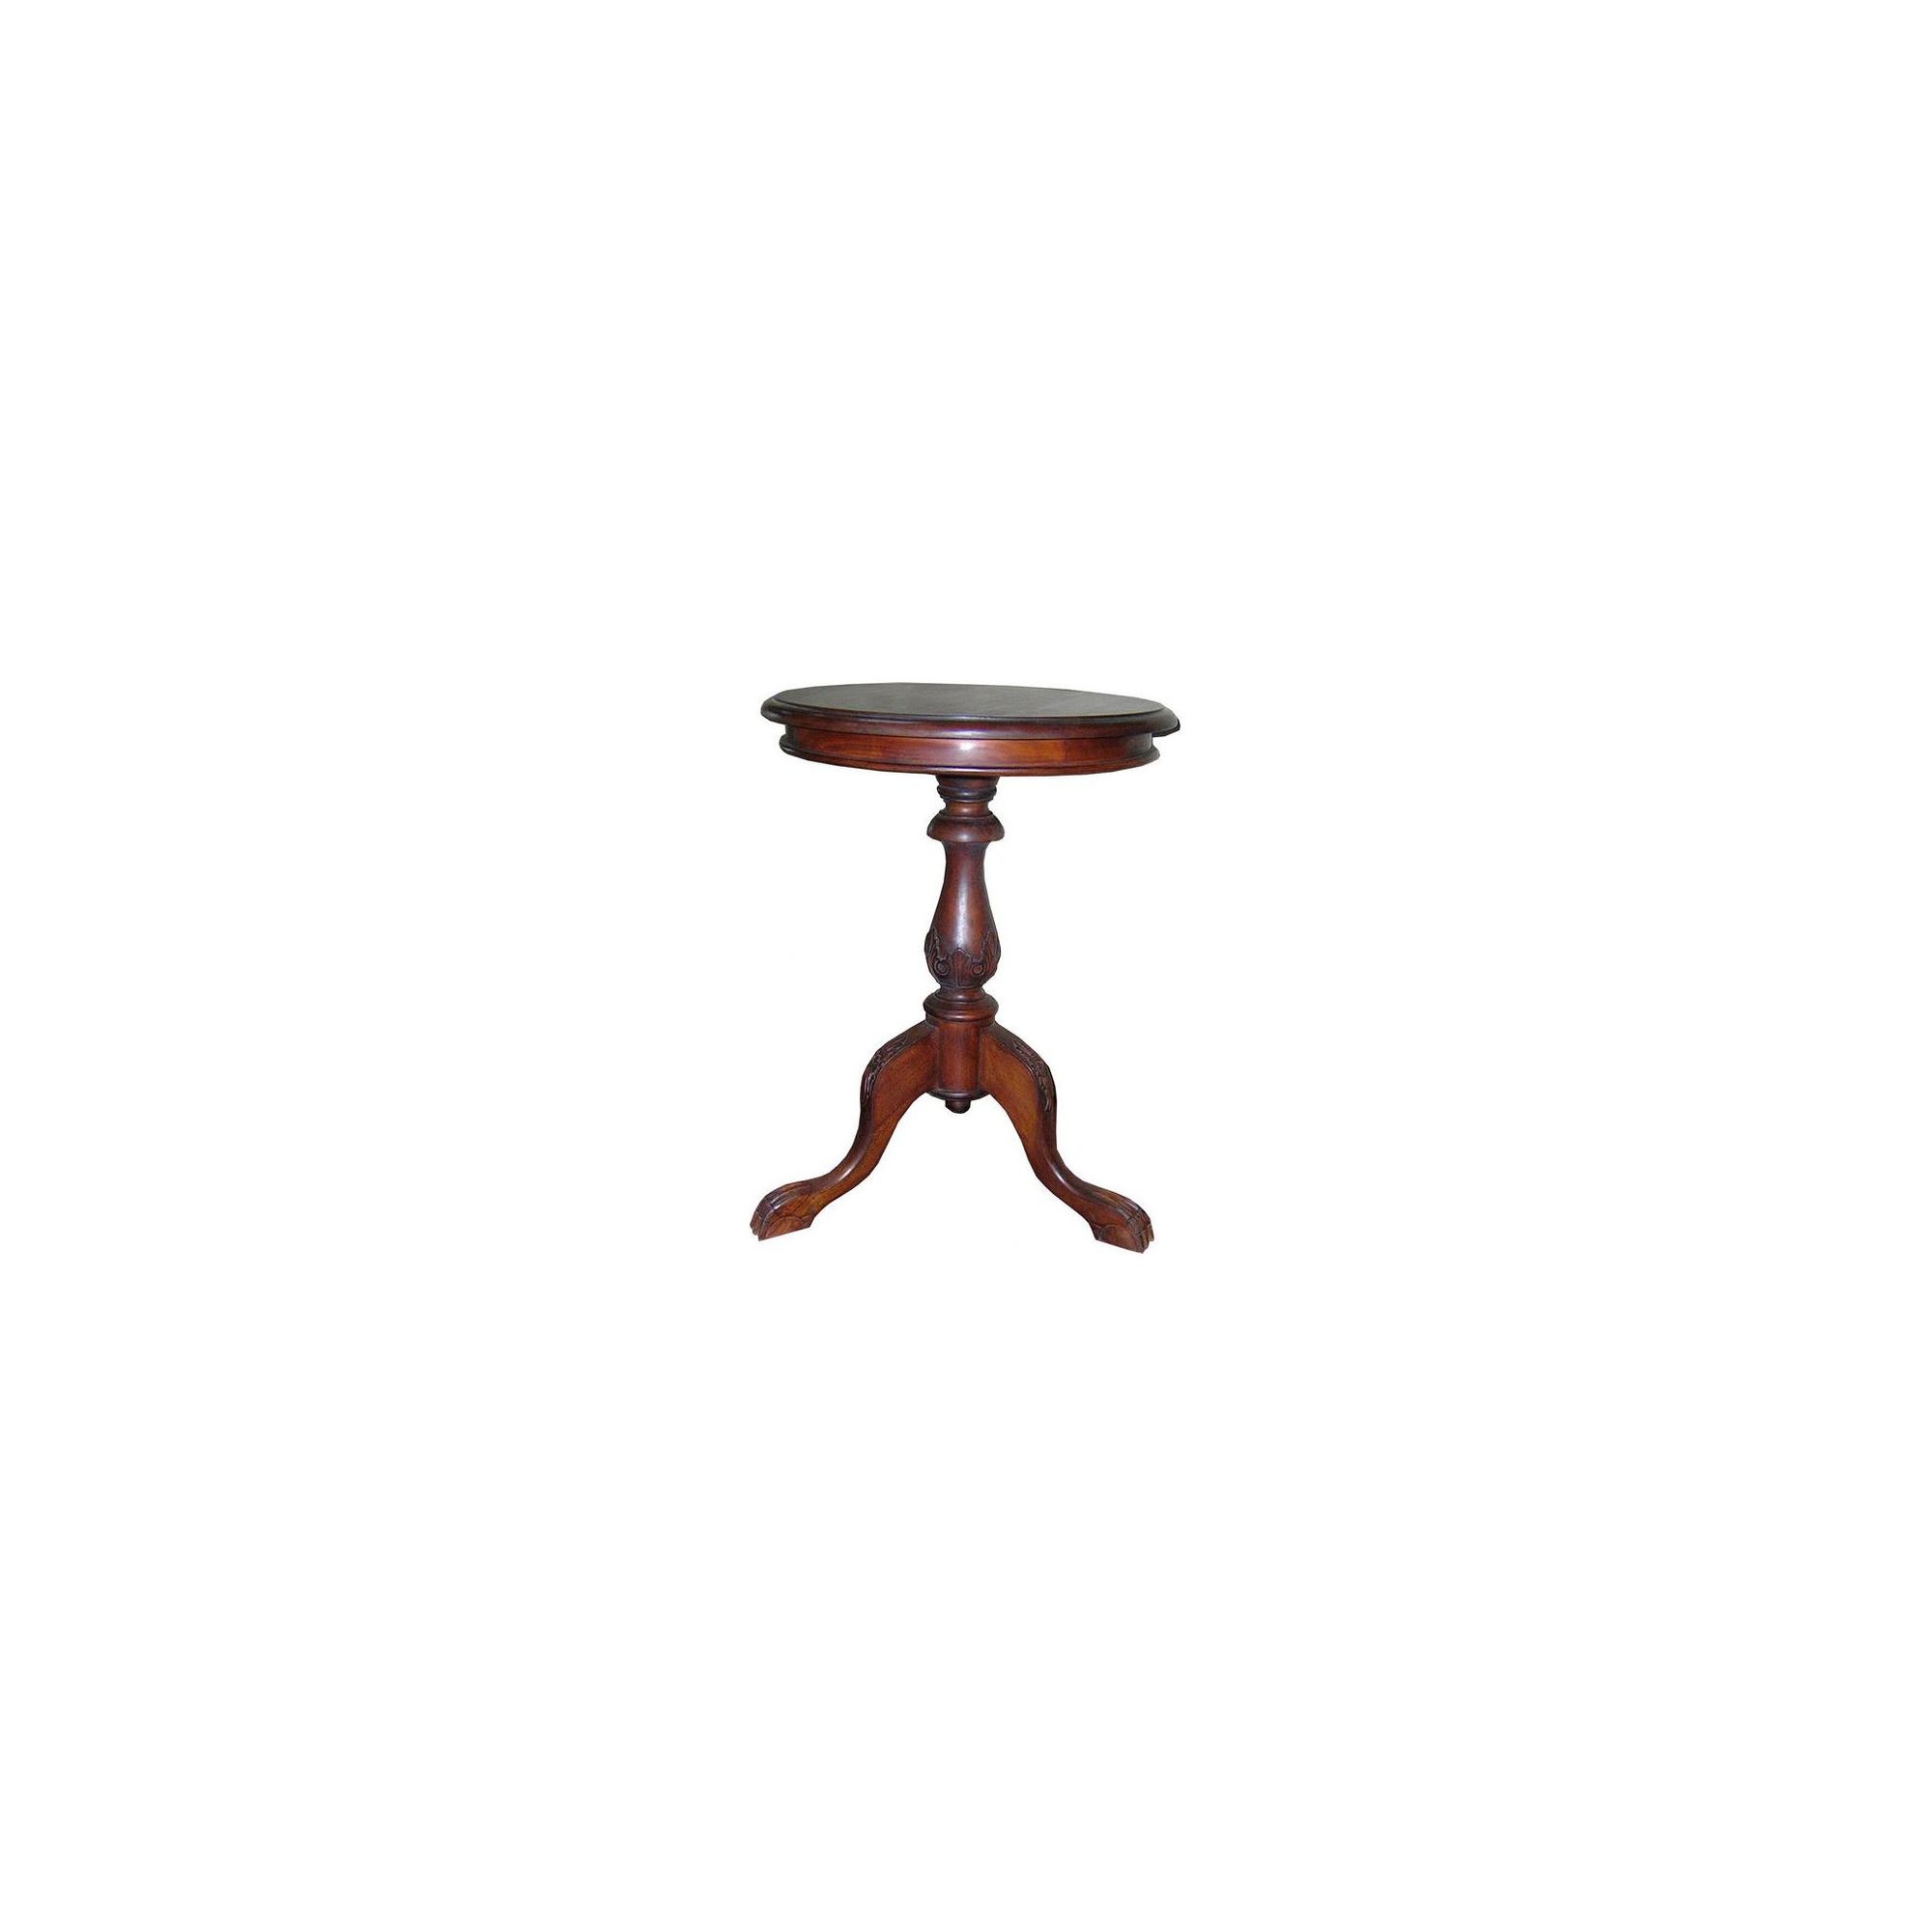 Lock stock and barrel Mahogany Carved Leg Wine Table in Mahogany at Tesco Direct